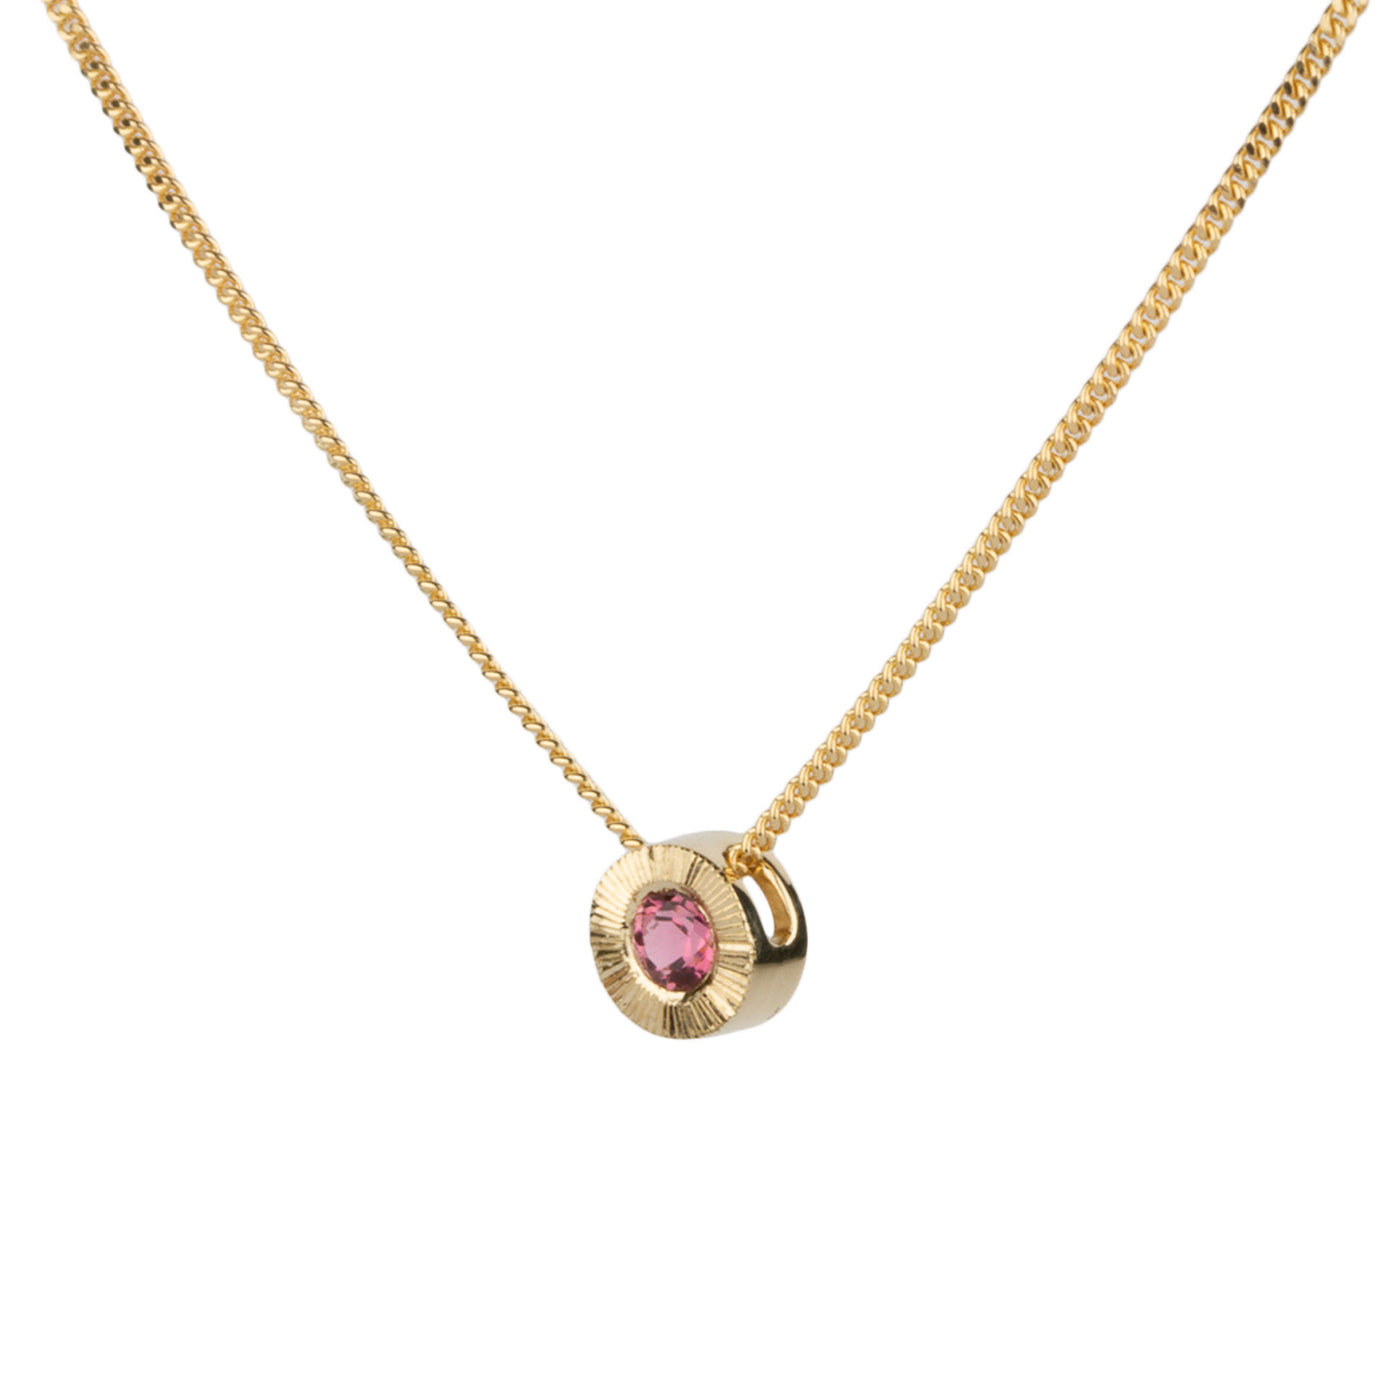 October birthstone Aurora slide necklace with pink tourmaline in yellow gold